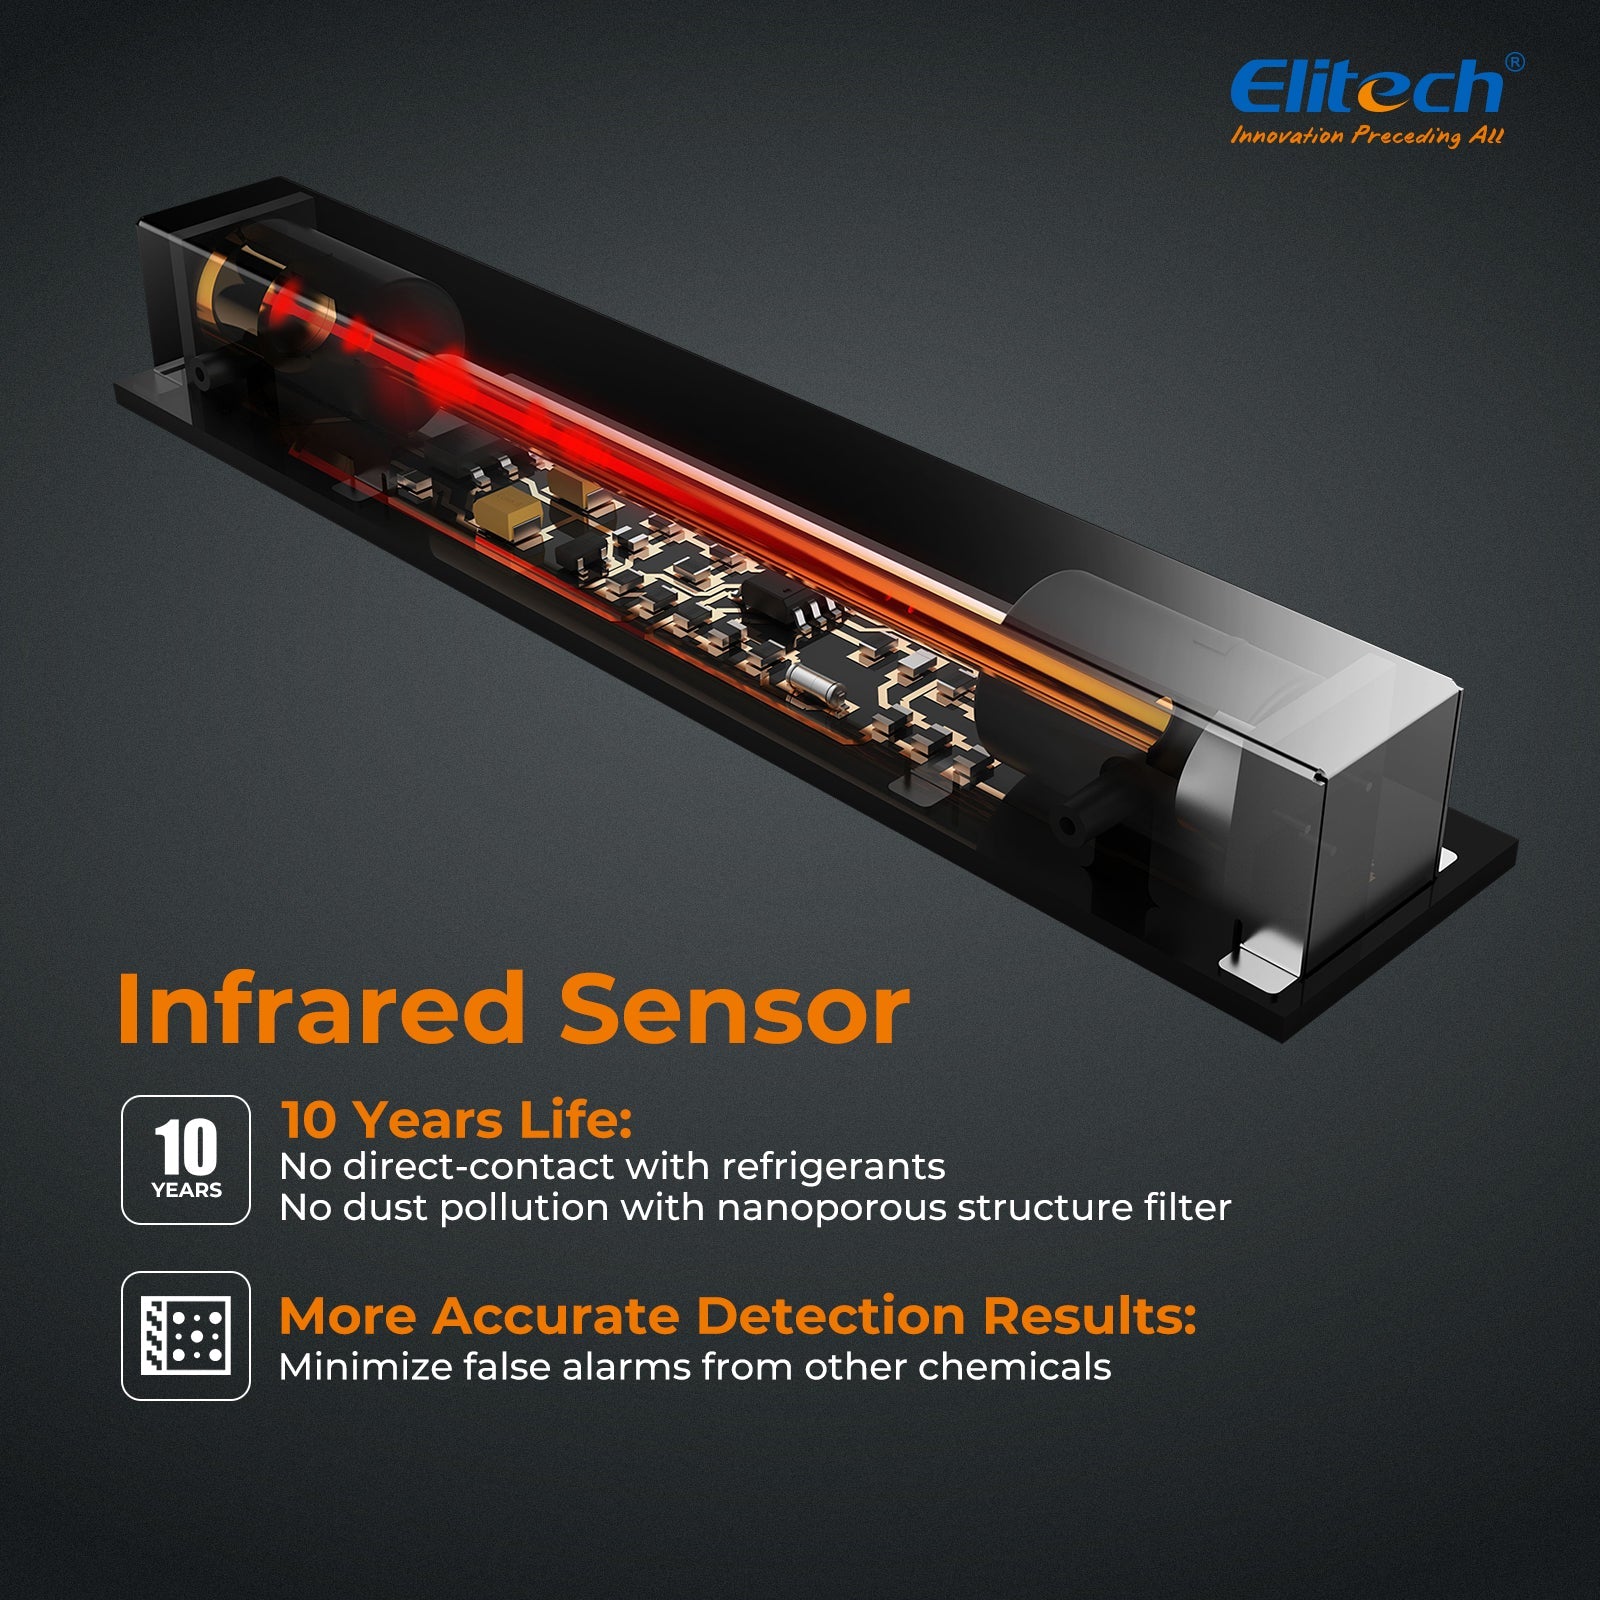 Elitech ILD-300 Infrared Refrigerant Leak Detector Detect All HFC, CFC, HCFC, HFO and Blends - Elitech Technology, Inc.